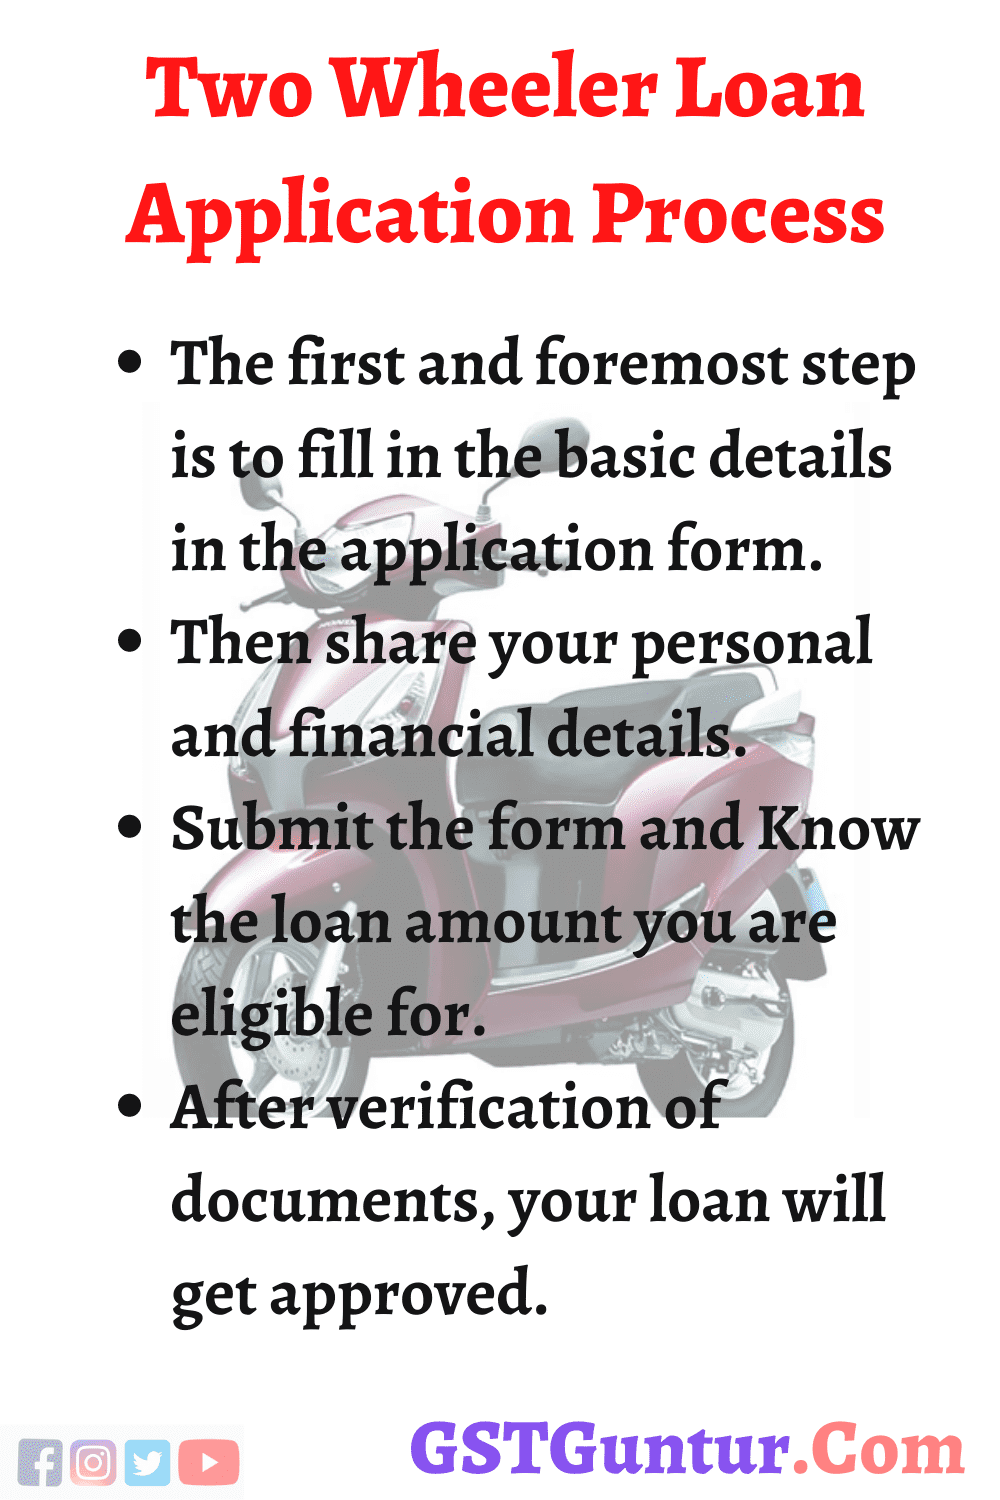 Two Wheeler Loan Application Process